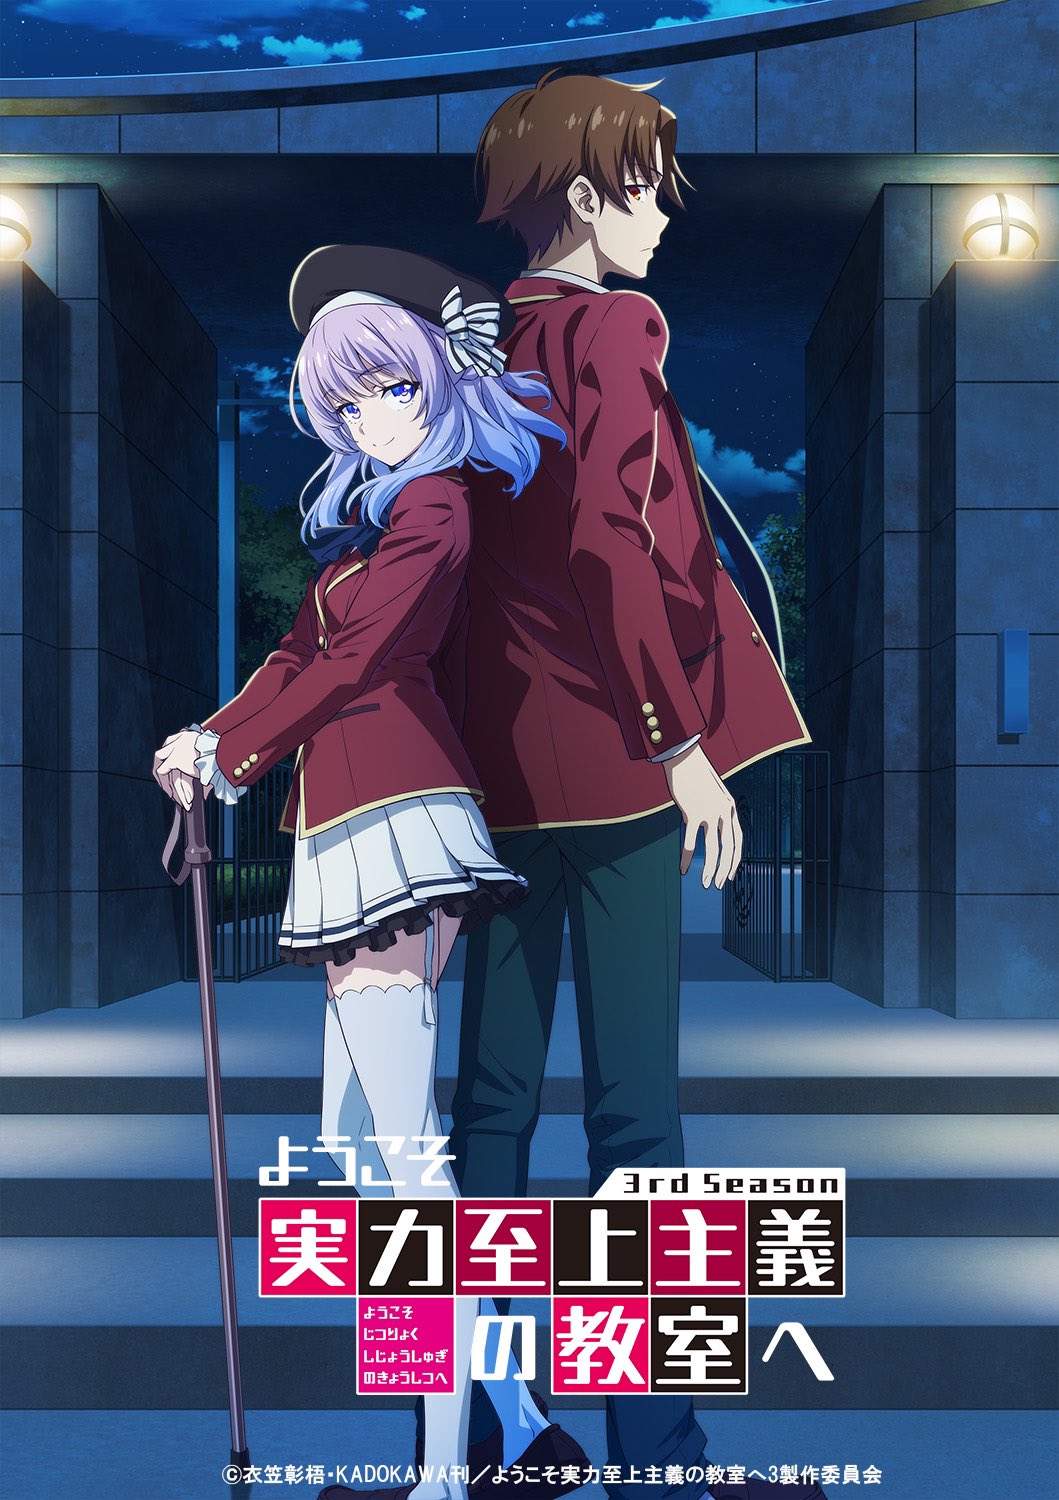 an poster of classroom of the elite season 3 new key visuals featuring ayankoji and arisu sakayanagi